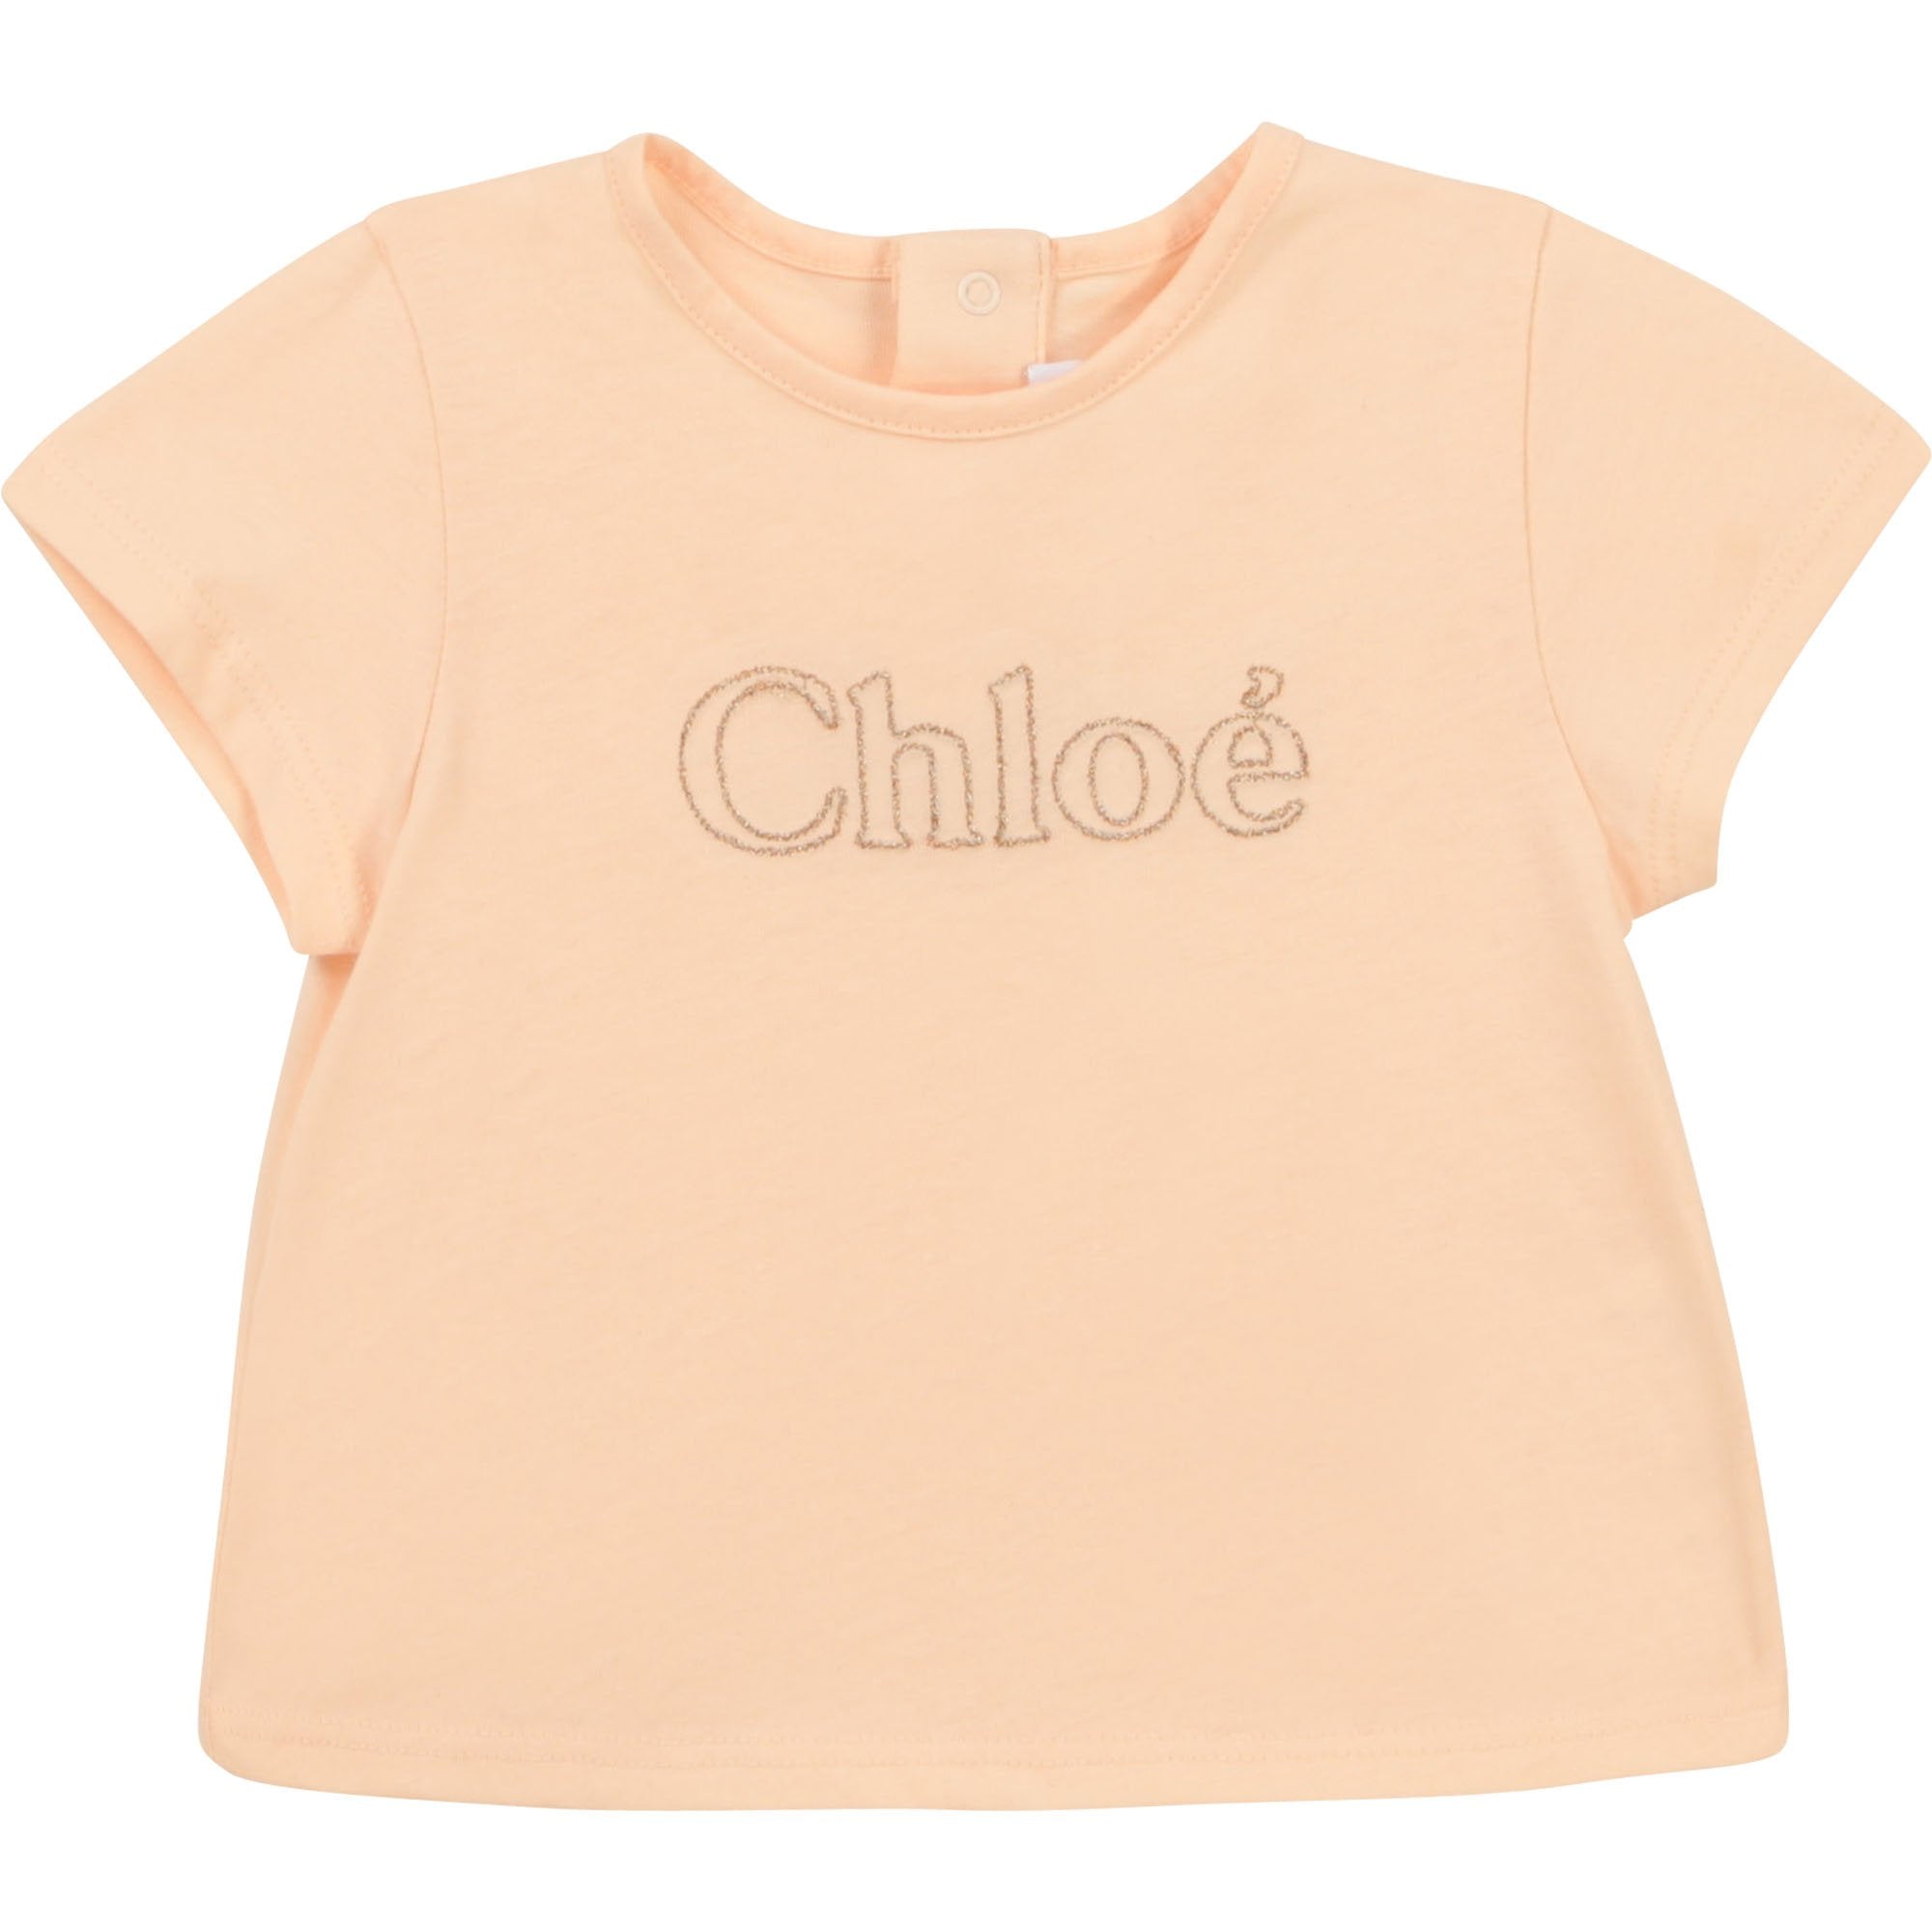 Chloé Girls Pale Pink Cotton T-Shirt - 2Y PINK